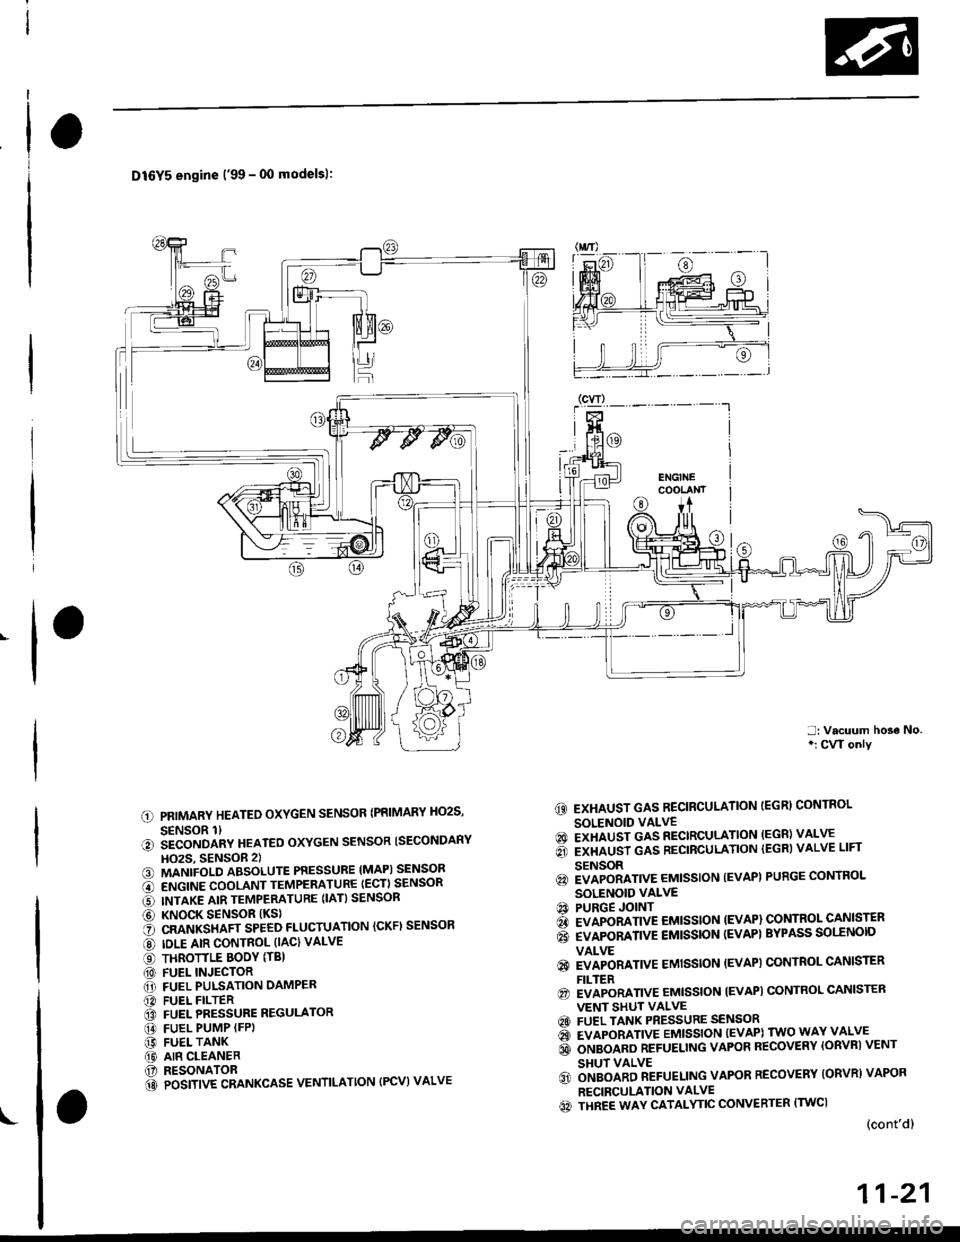 HONDA CIVIC 1999 6.G Workshop Manual D16Y5 engine (99 - 00 modelsl:
O) PRIMARY HEATED OXYGEN SENSOR (PBIMARY HO2S,
SENSOR 1)
O SECONDARY HEATEO OXYGEN SENSOR {SECONDARY
HO2S. SENSOR 2)
6] MANIFOLD ABSOLUTE PRESSURE IMAPI SENSOR
rO CruCI